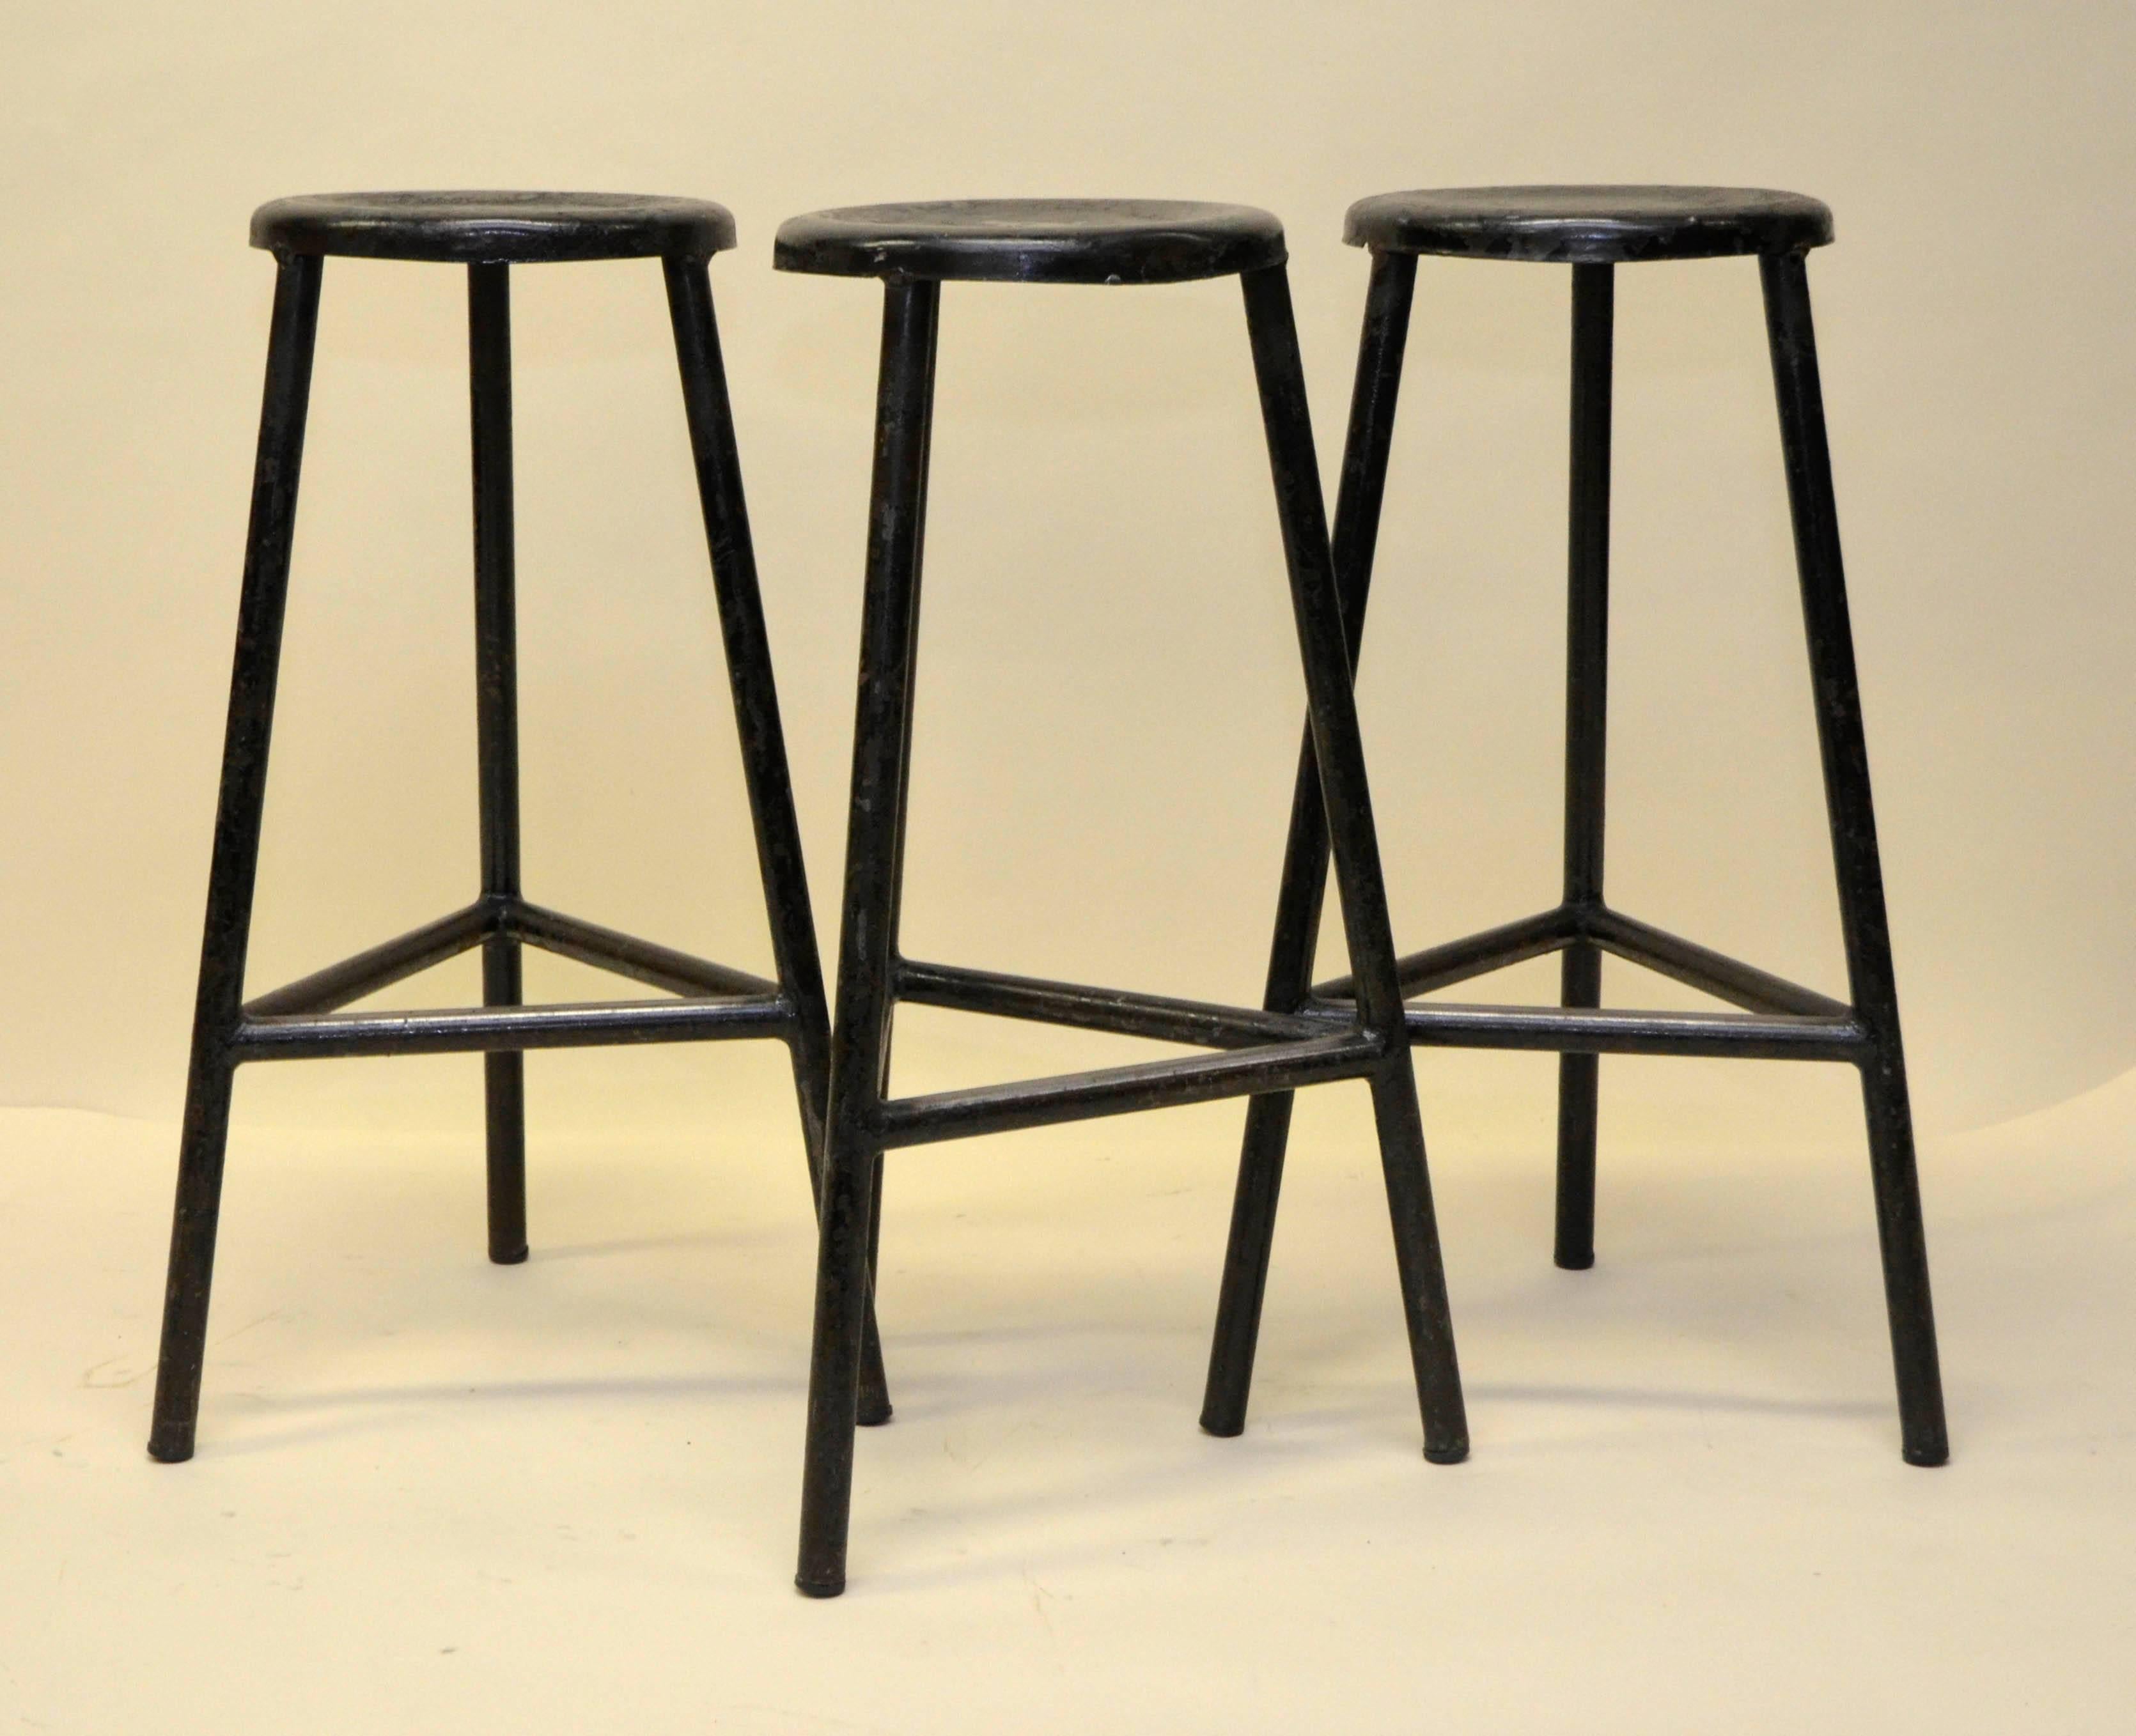 Three black metal 1960s Italian industrial design three-legged bar high stools with comfortable foot rail.
Measures: Seat height 70 cm, round seat diameter 42 cm.
Triangular shaped foot rail height 27 cm.

Two set of three in stock.